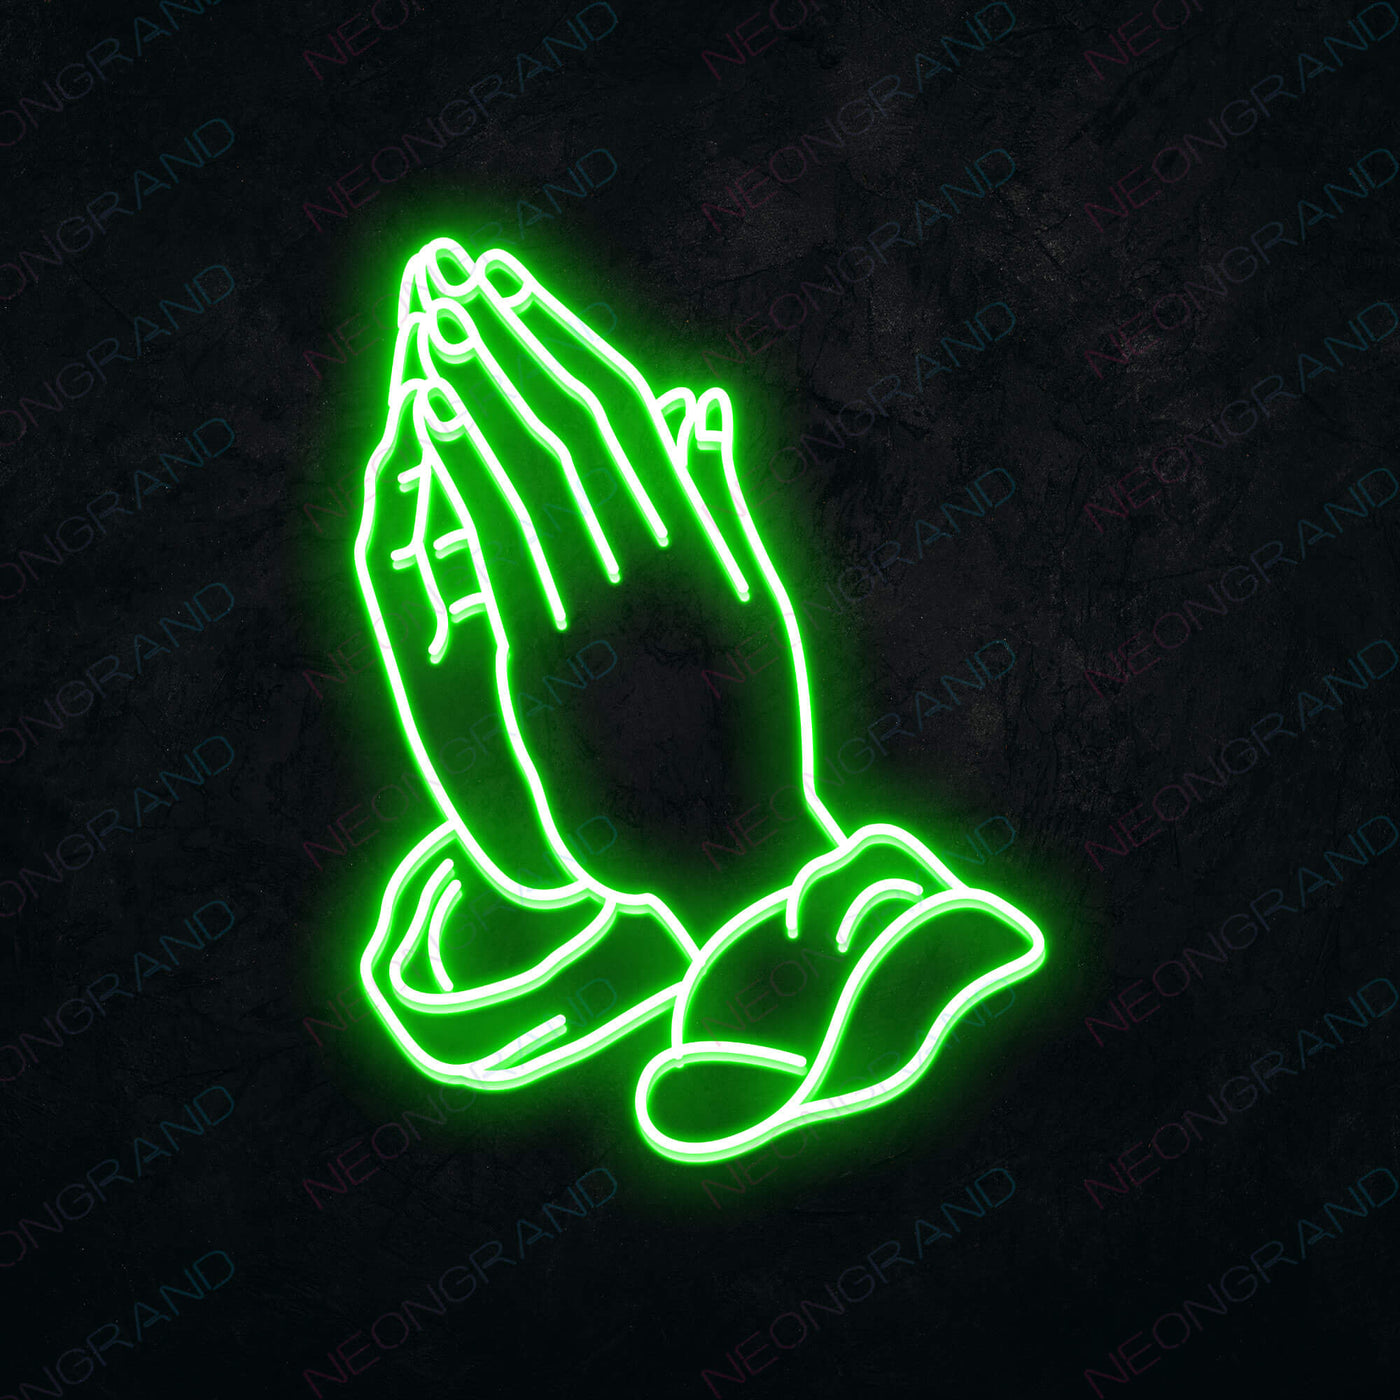 Neon Praying Hands Sign Led Light green